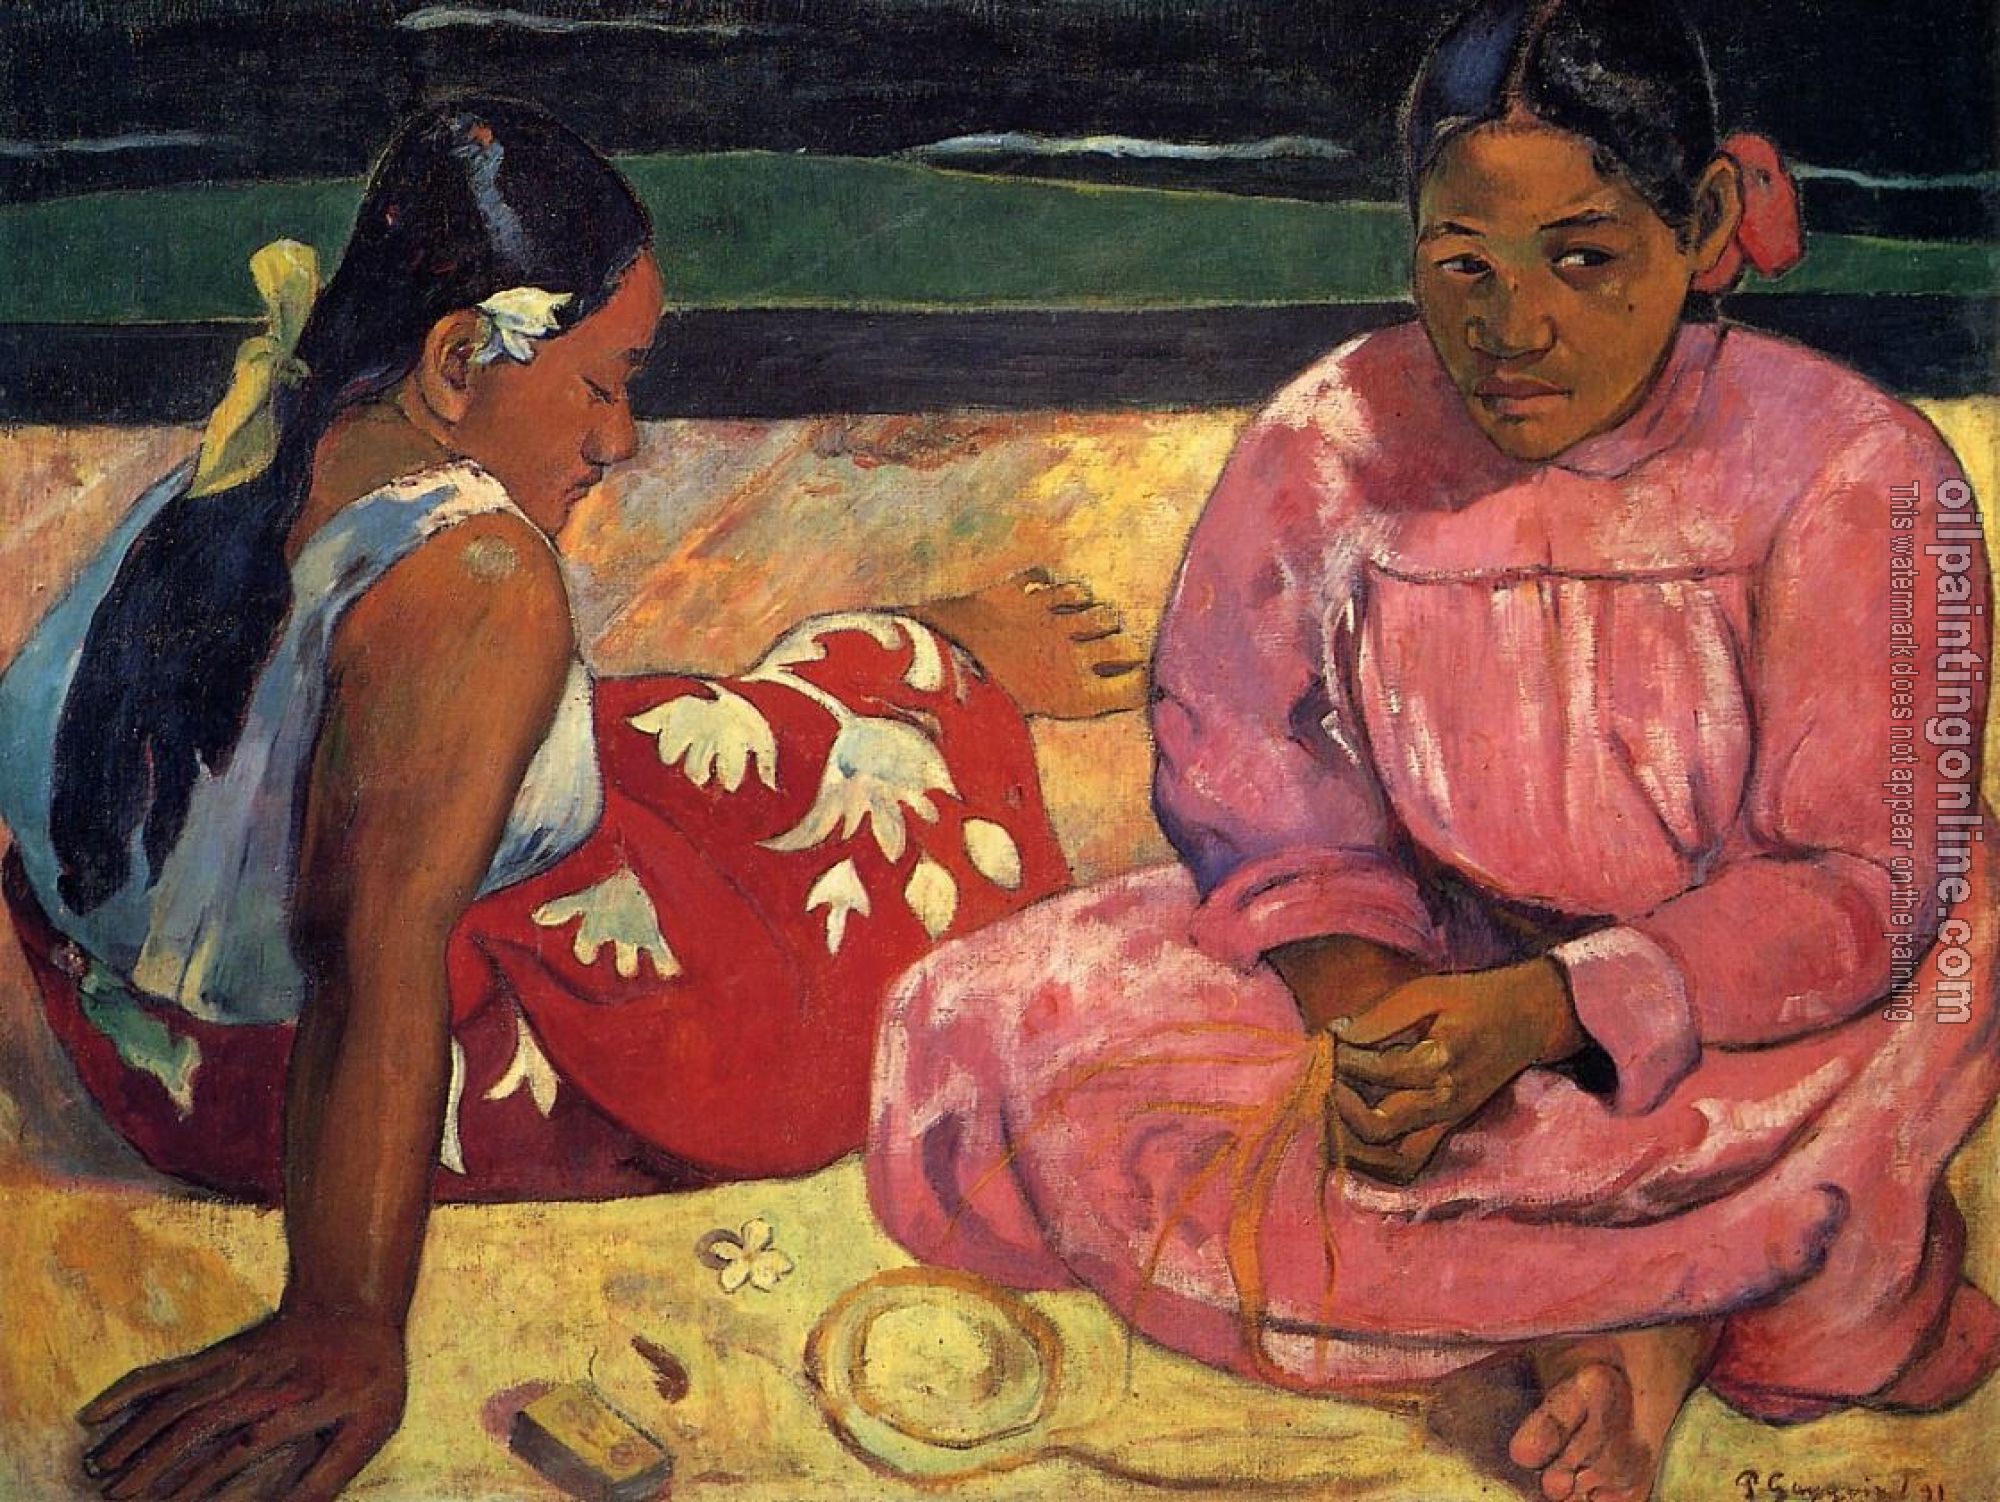 Gauguin, Paul - Two Women on the Beach